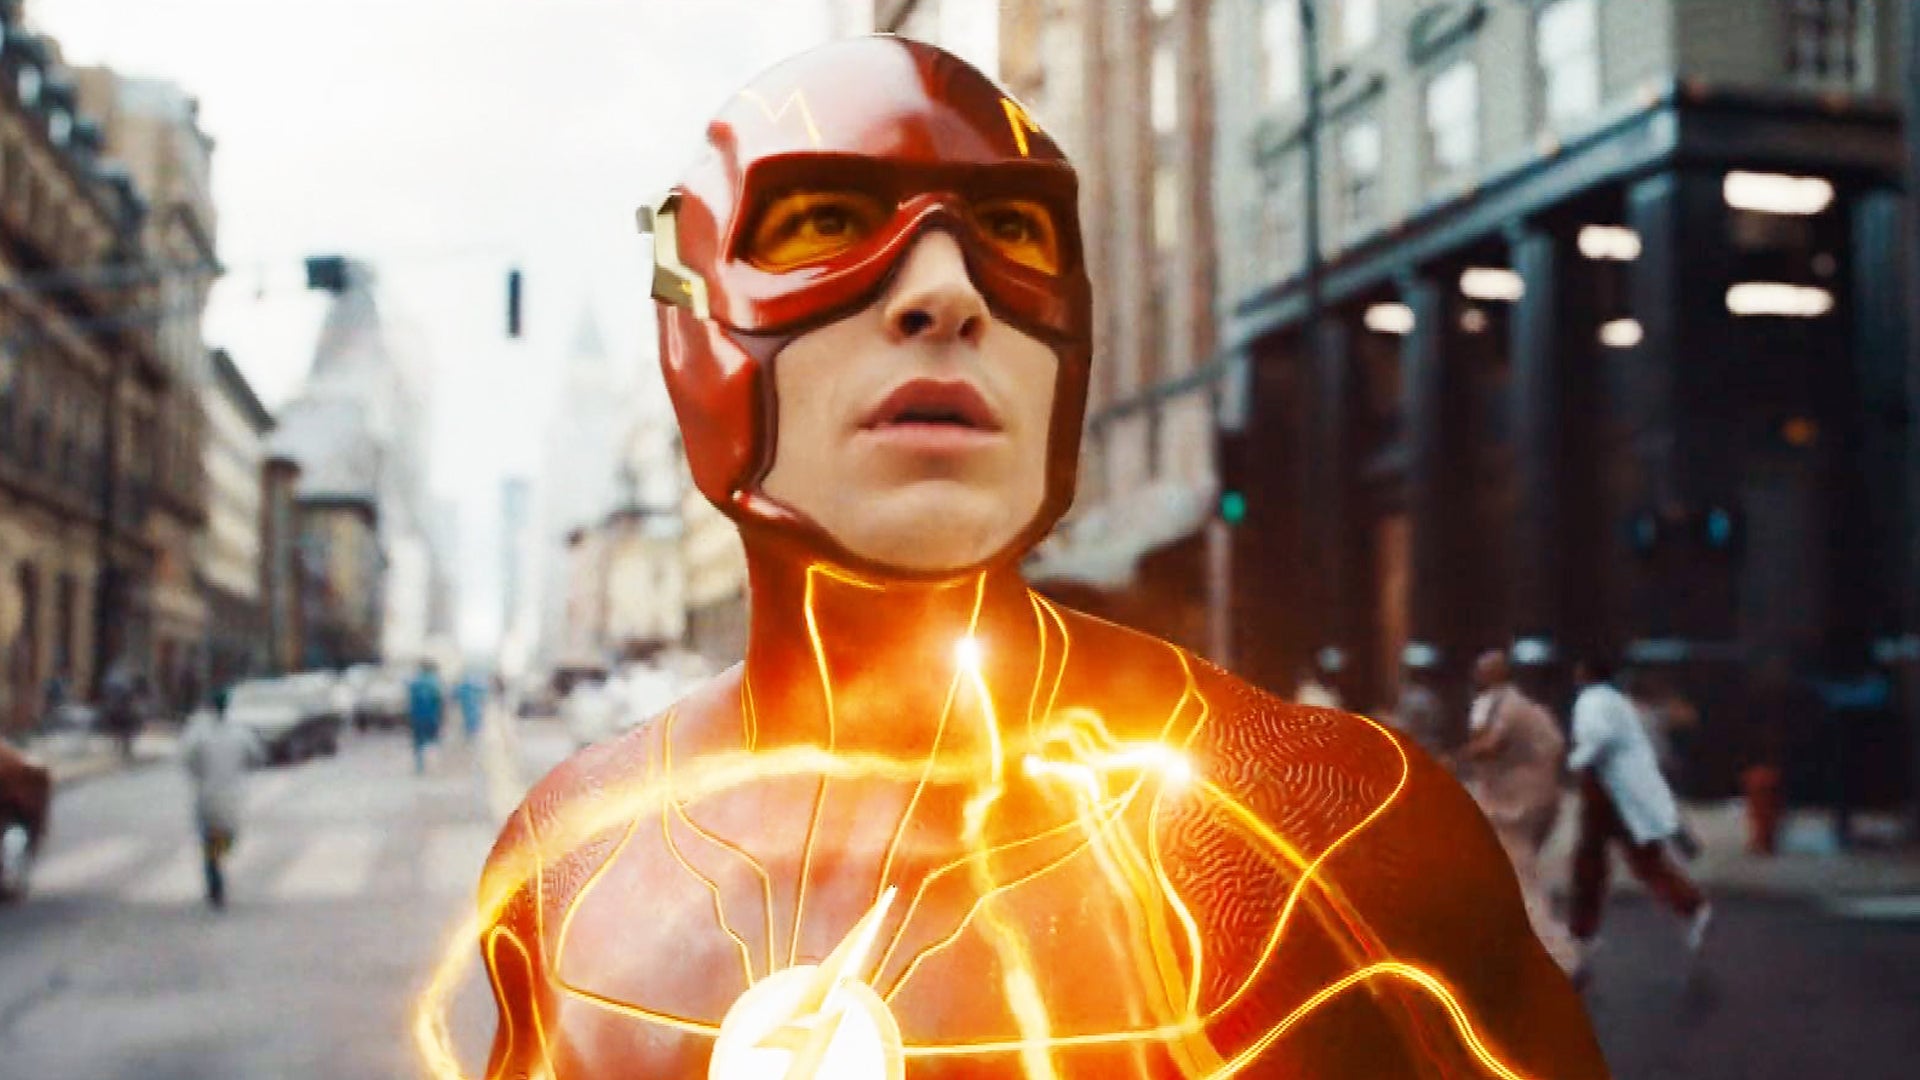 The Flash - Official Final Trailer (2023) Michael Keaton, Ezra